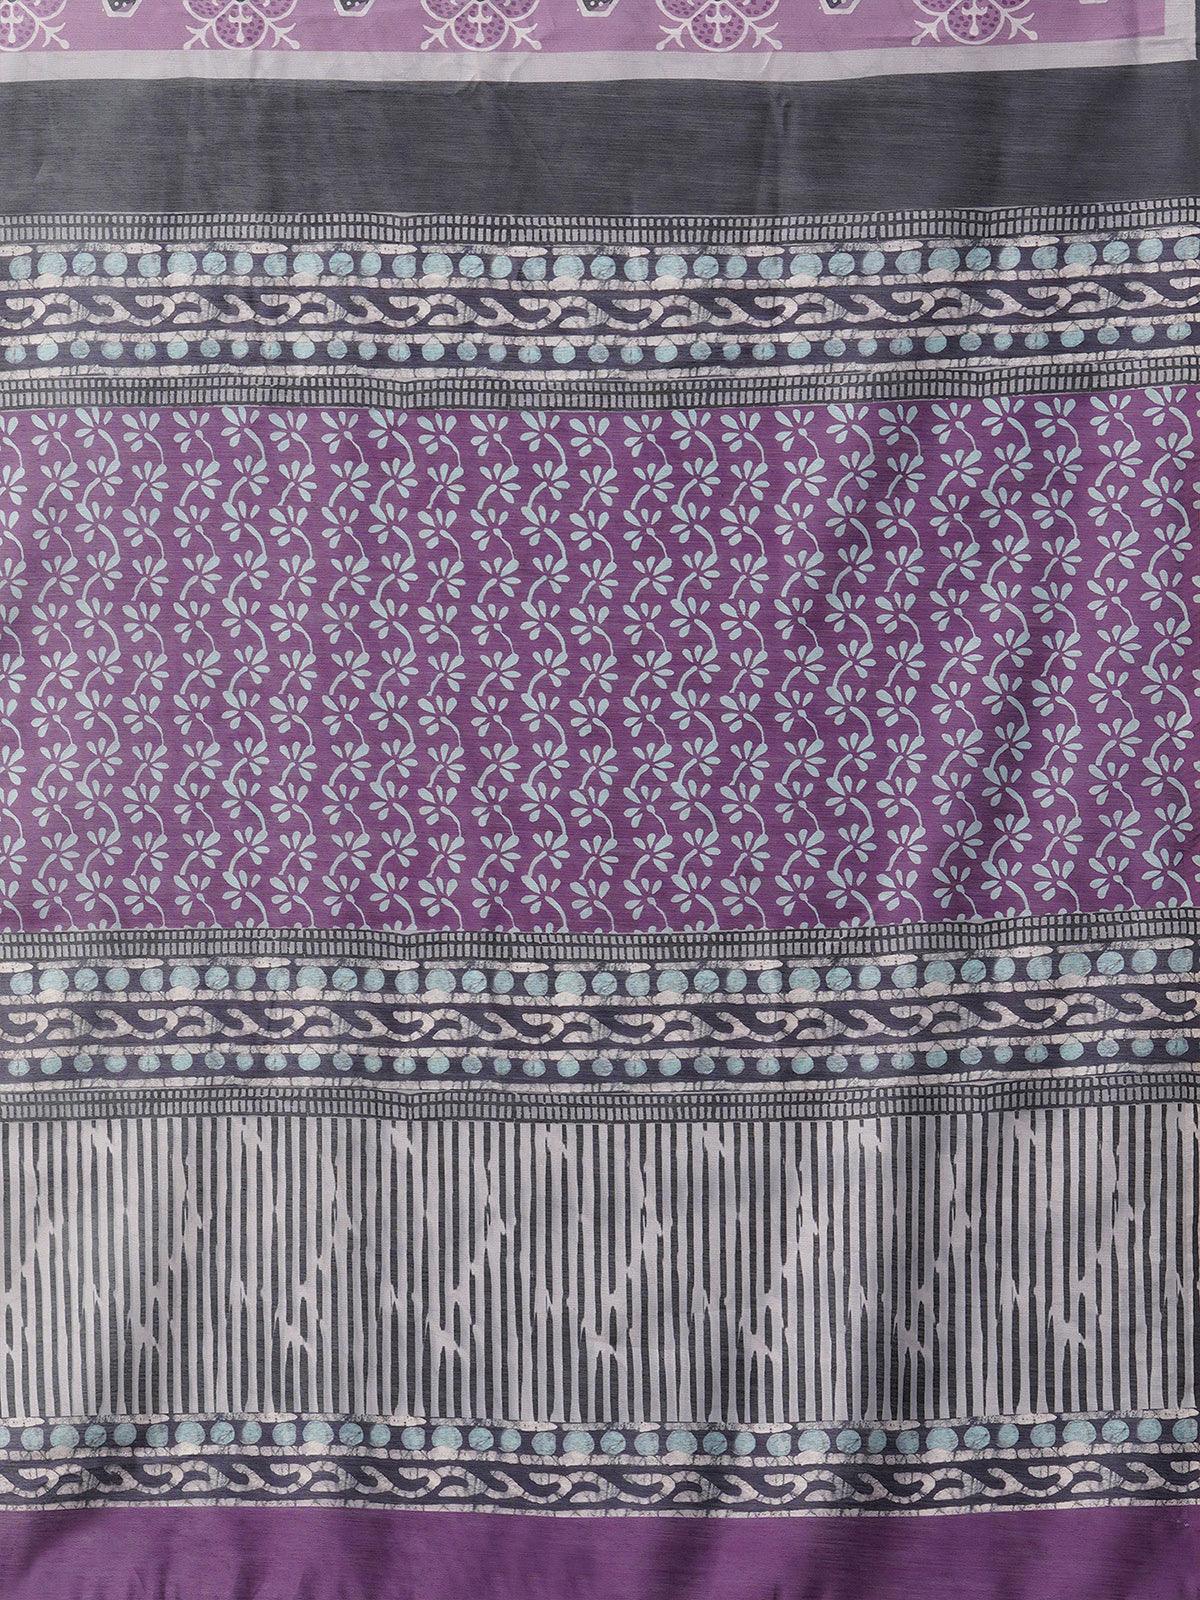 Purple Festive Bhagalpuri Silk Printed Saree With Unstitched Blouse - Odette